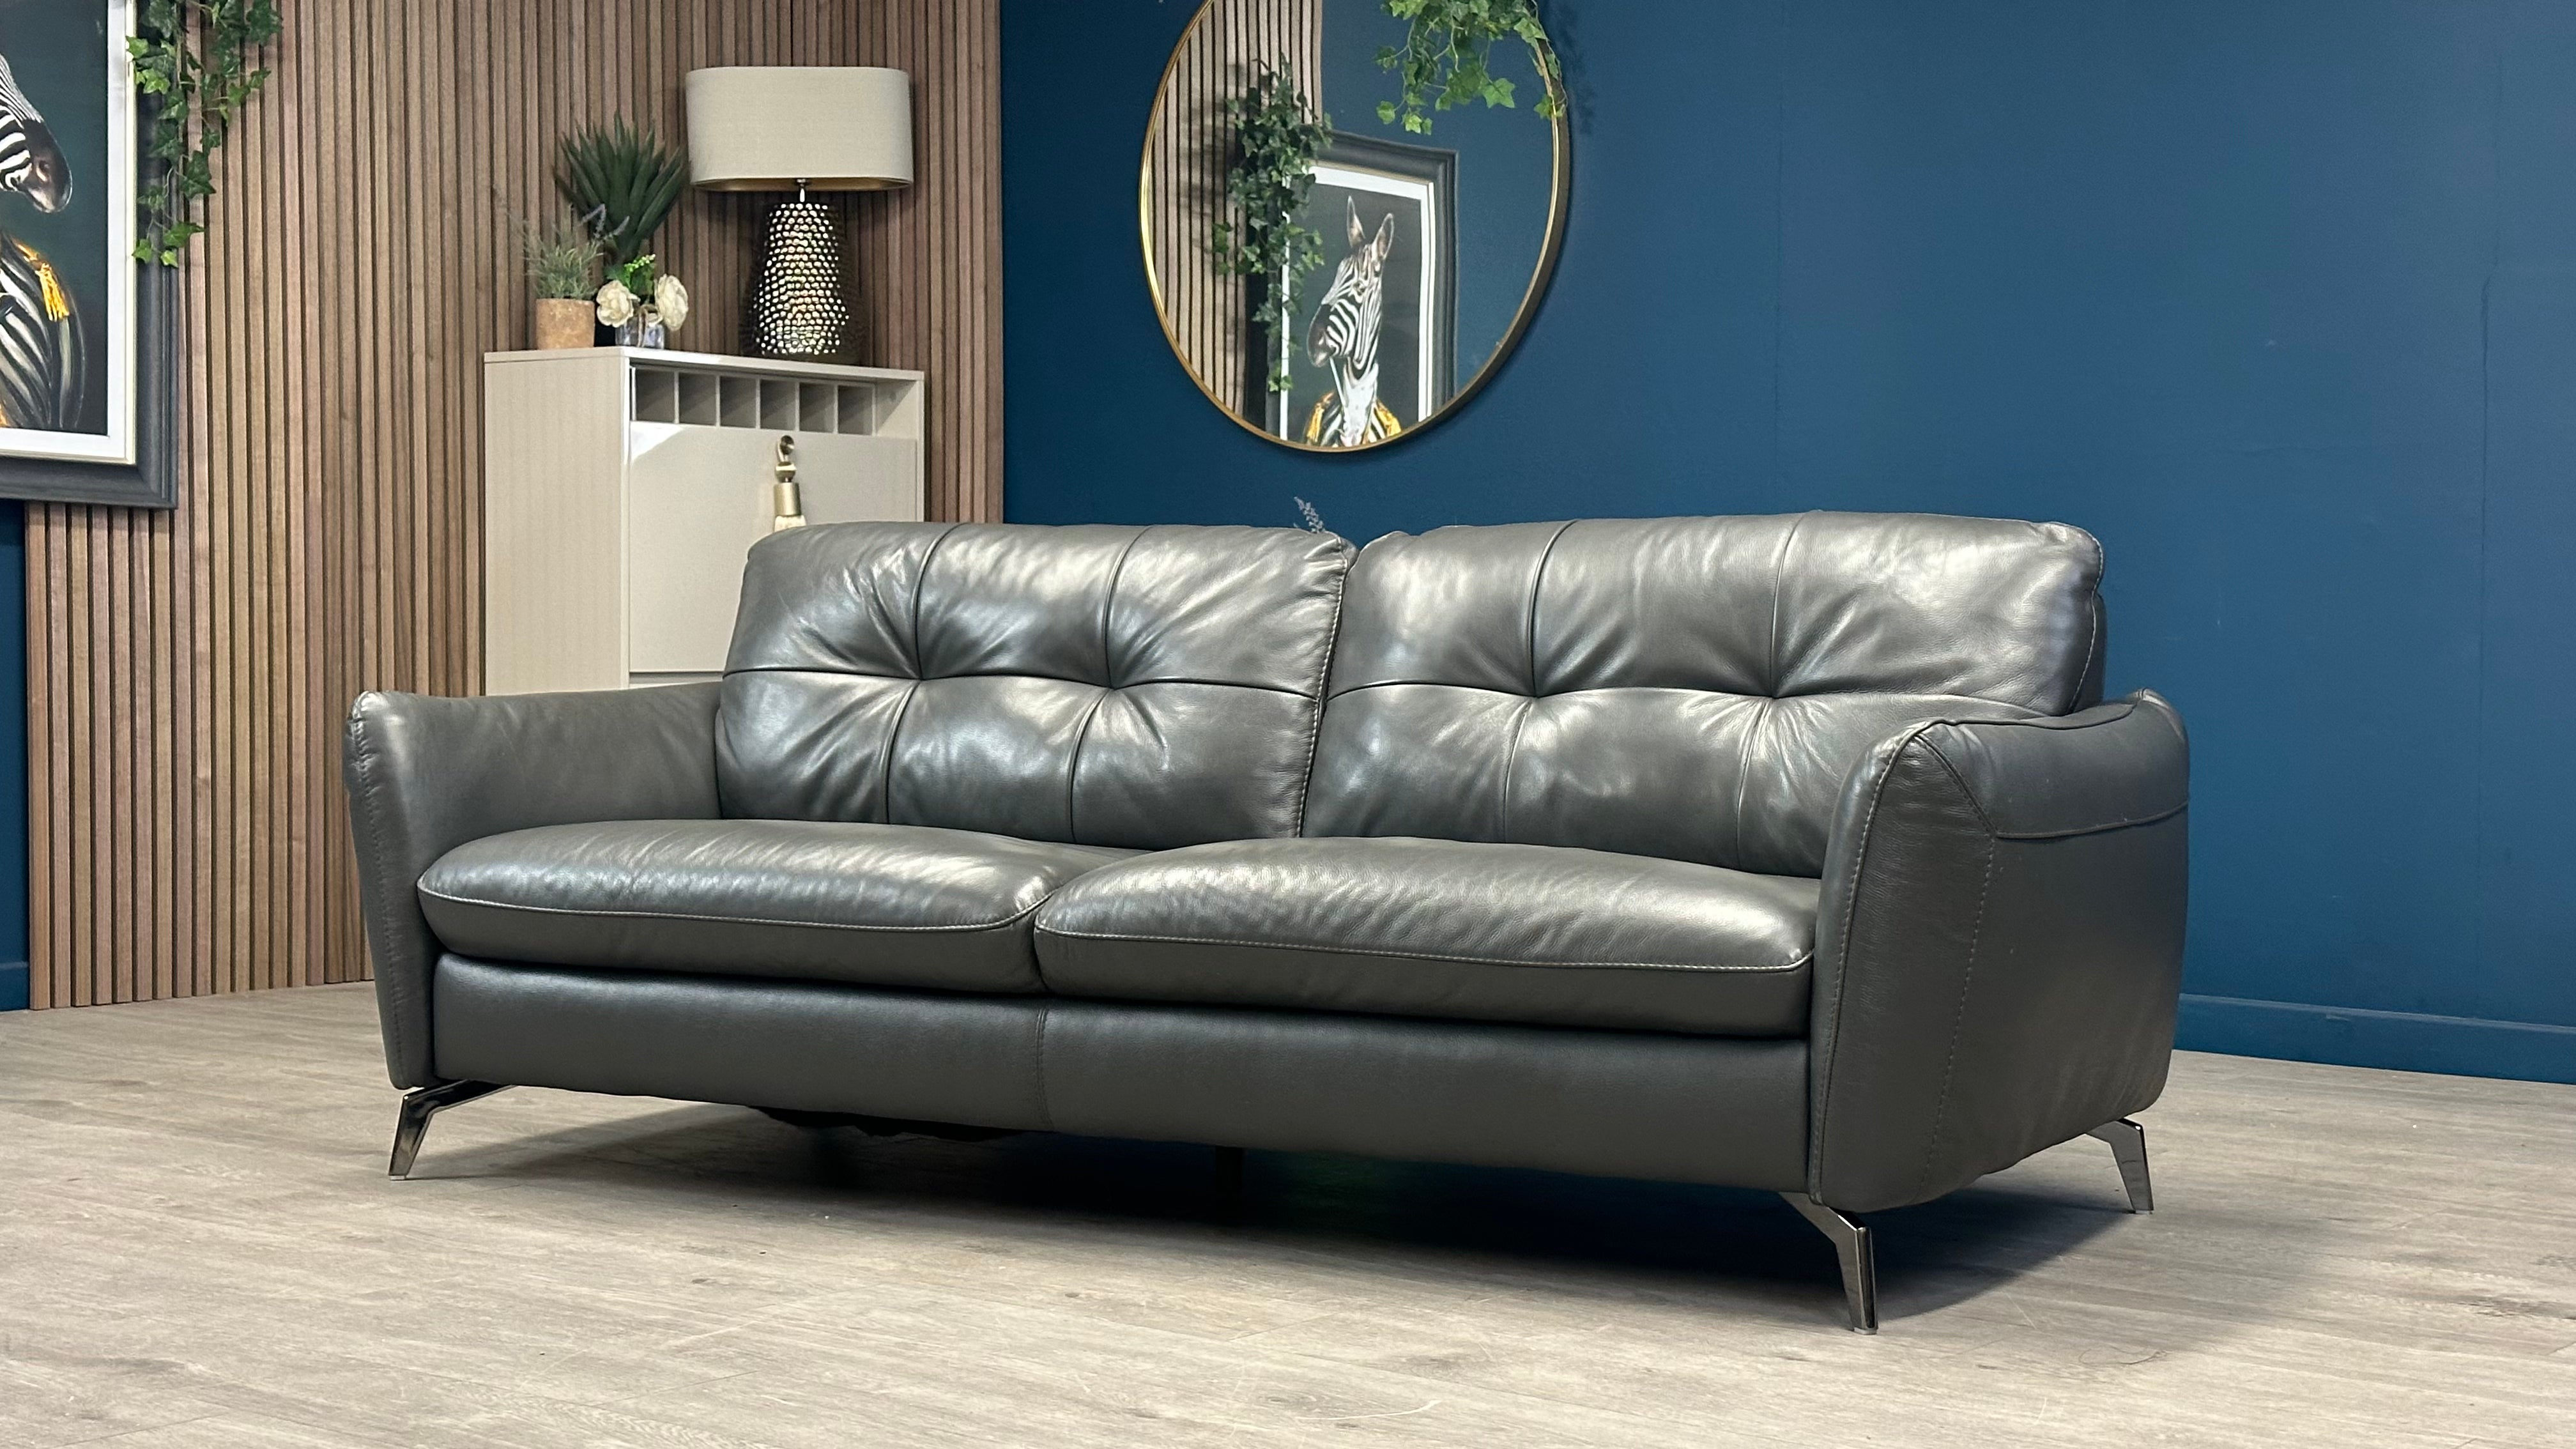 Mina 3 Seater Grey Leather Sofa